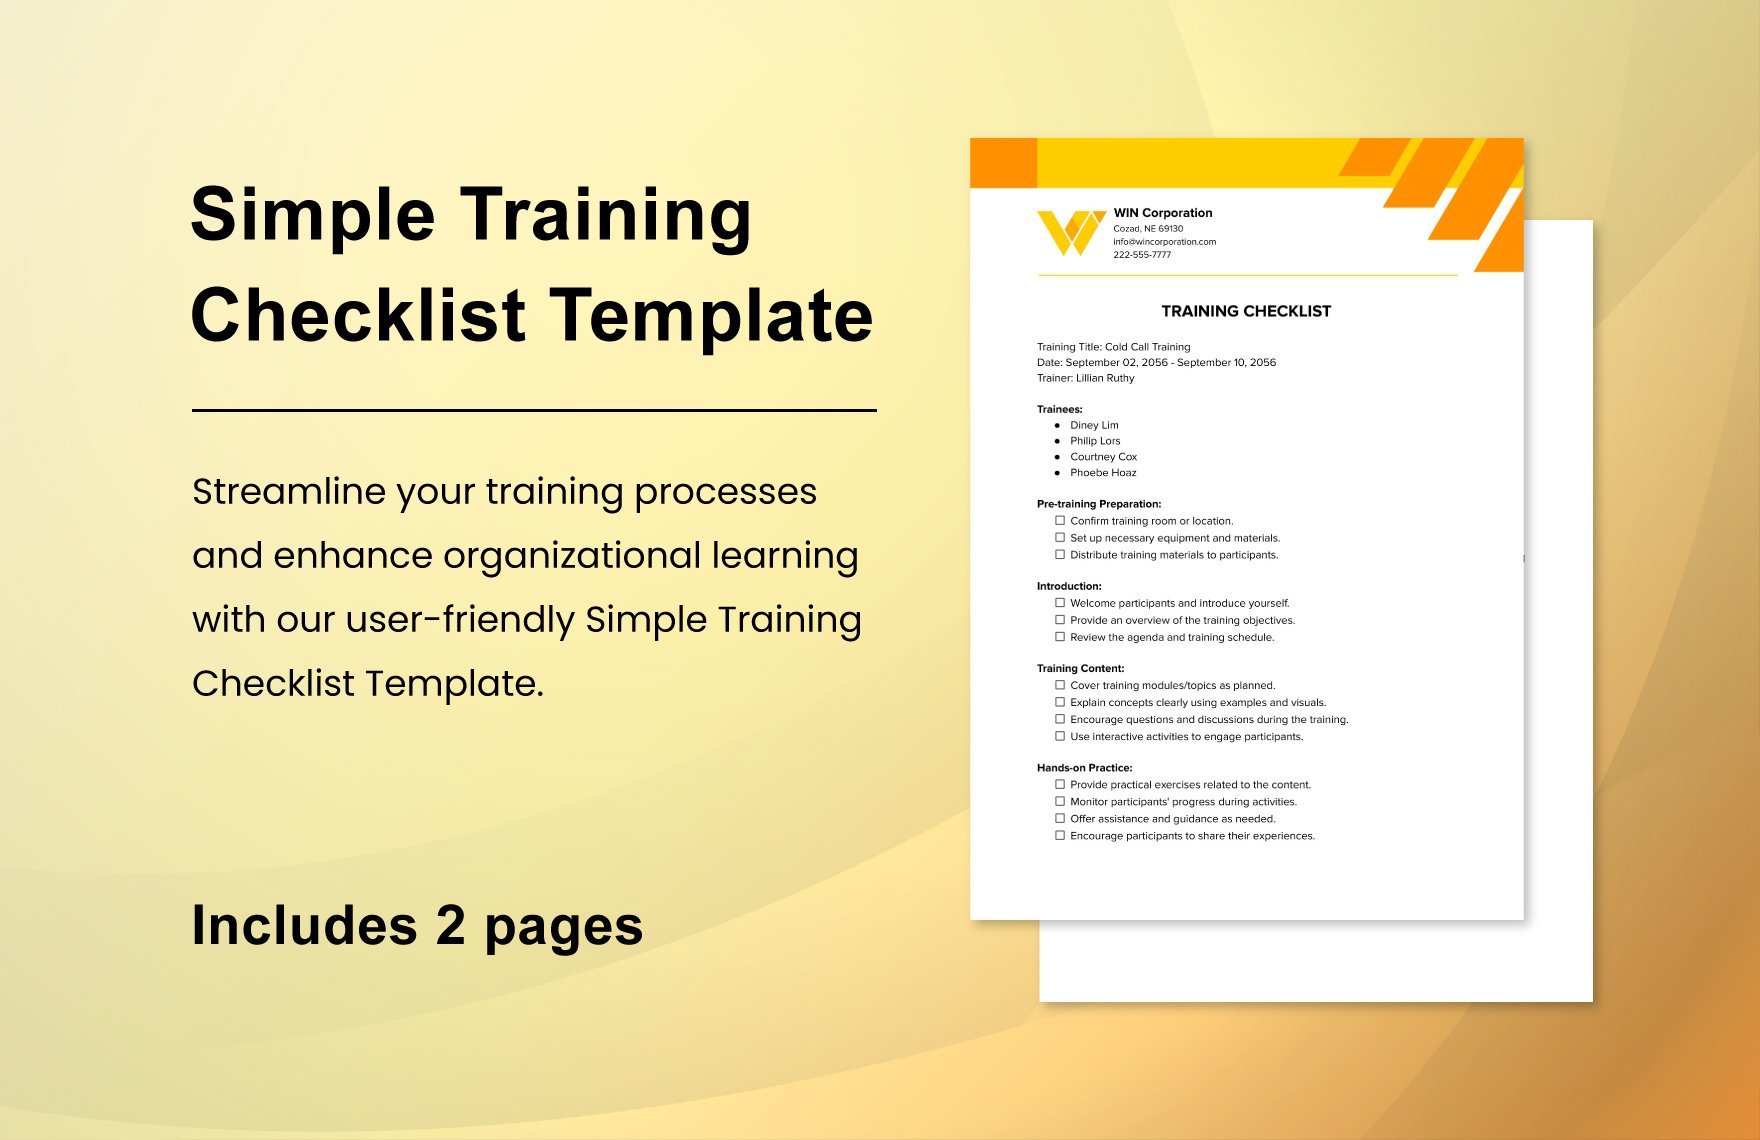 Simple Training Checklist Template